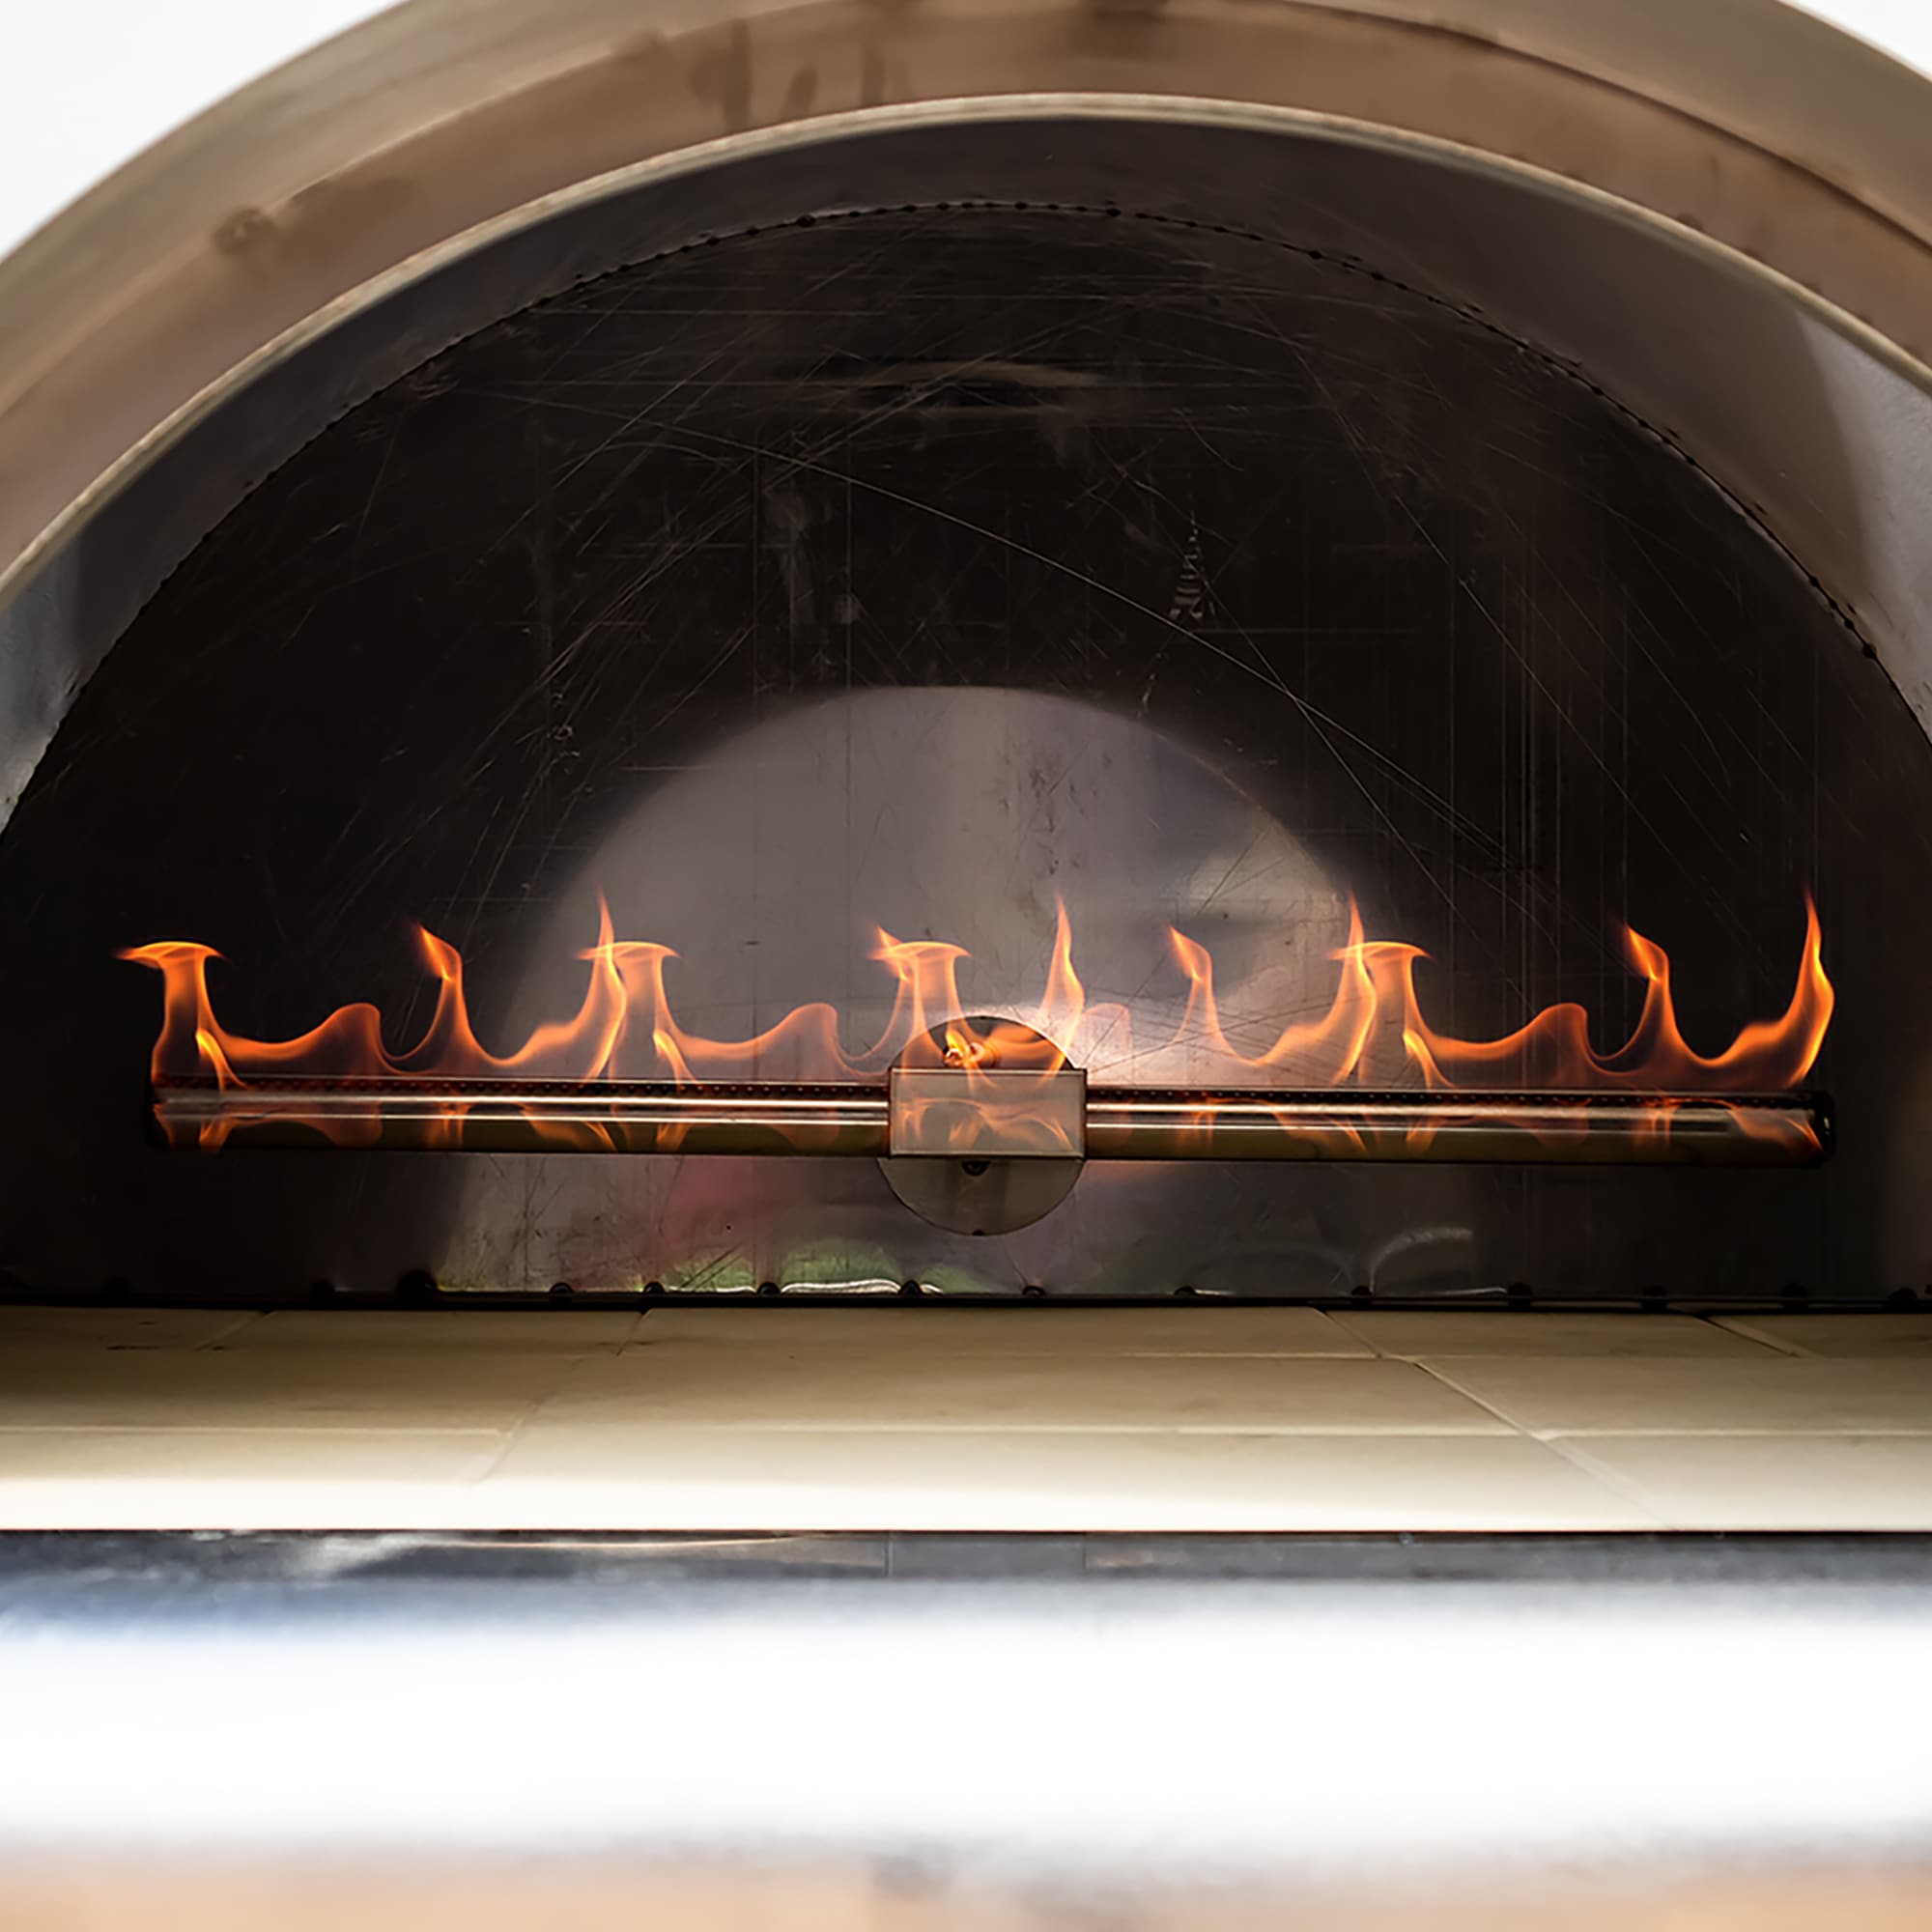 Pinnacolo L'Argilla Thermal Clay Gas Pizza Oven - Patio & Pizza Outdoor  Furnishings